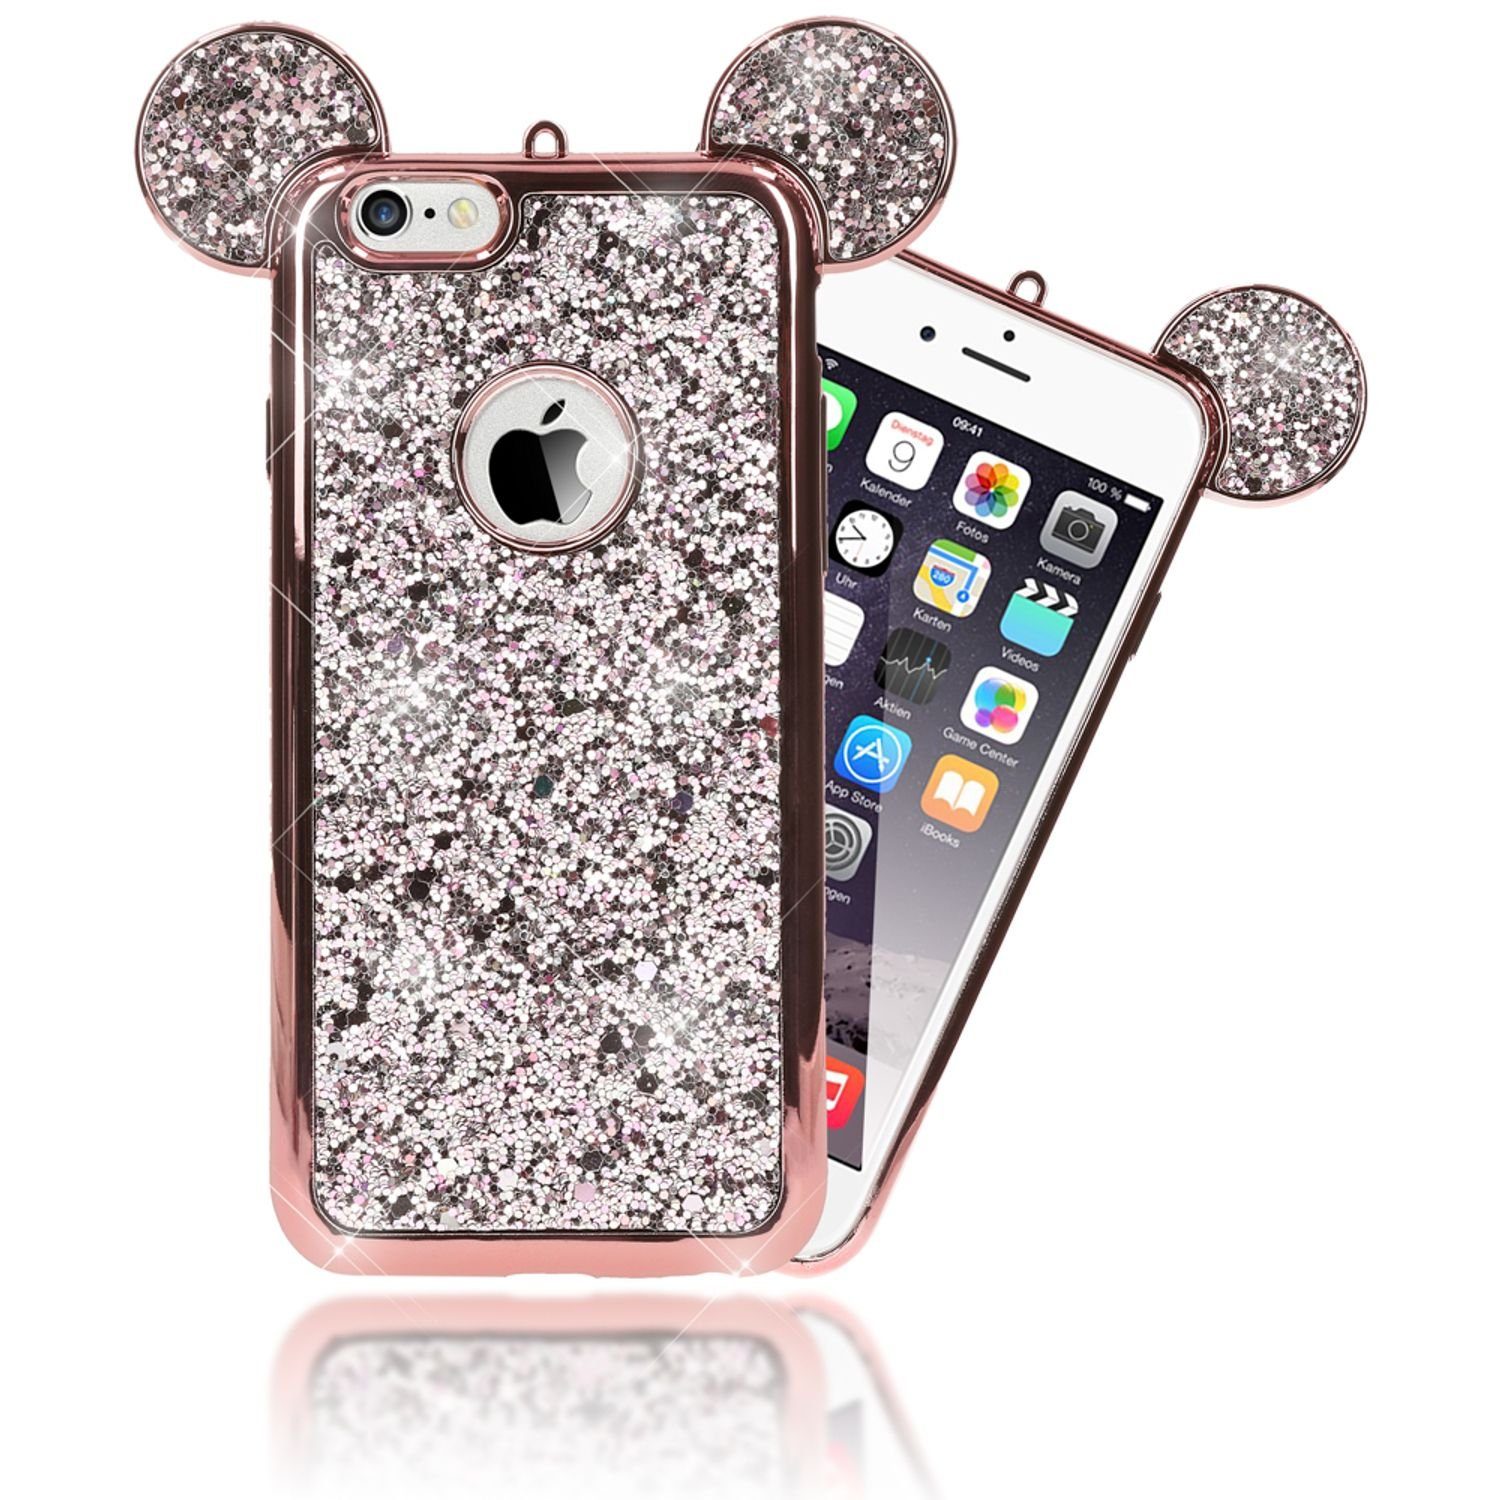 Nalia Smartphone-Hülle Apple iPhone 6 Apple iPhone 6s, Glitzer Mouse-Look  Silikon Hülle / Glitter Case mit Maus Ohren / Pailletten Schutzhülle /  Flexibel / Strass Bling Etui / Slim Glamour Cover /